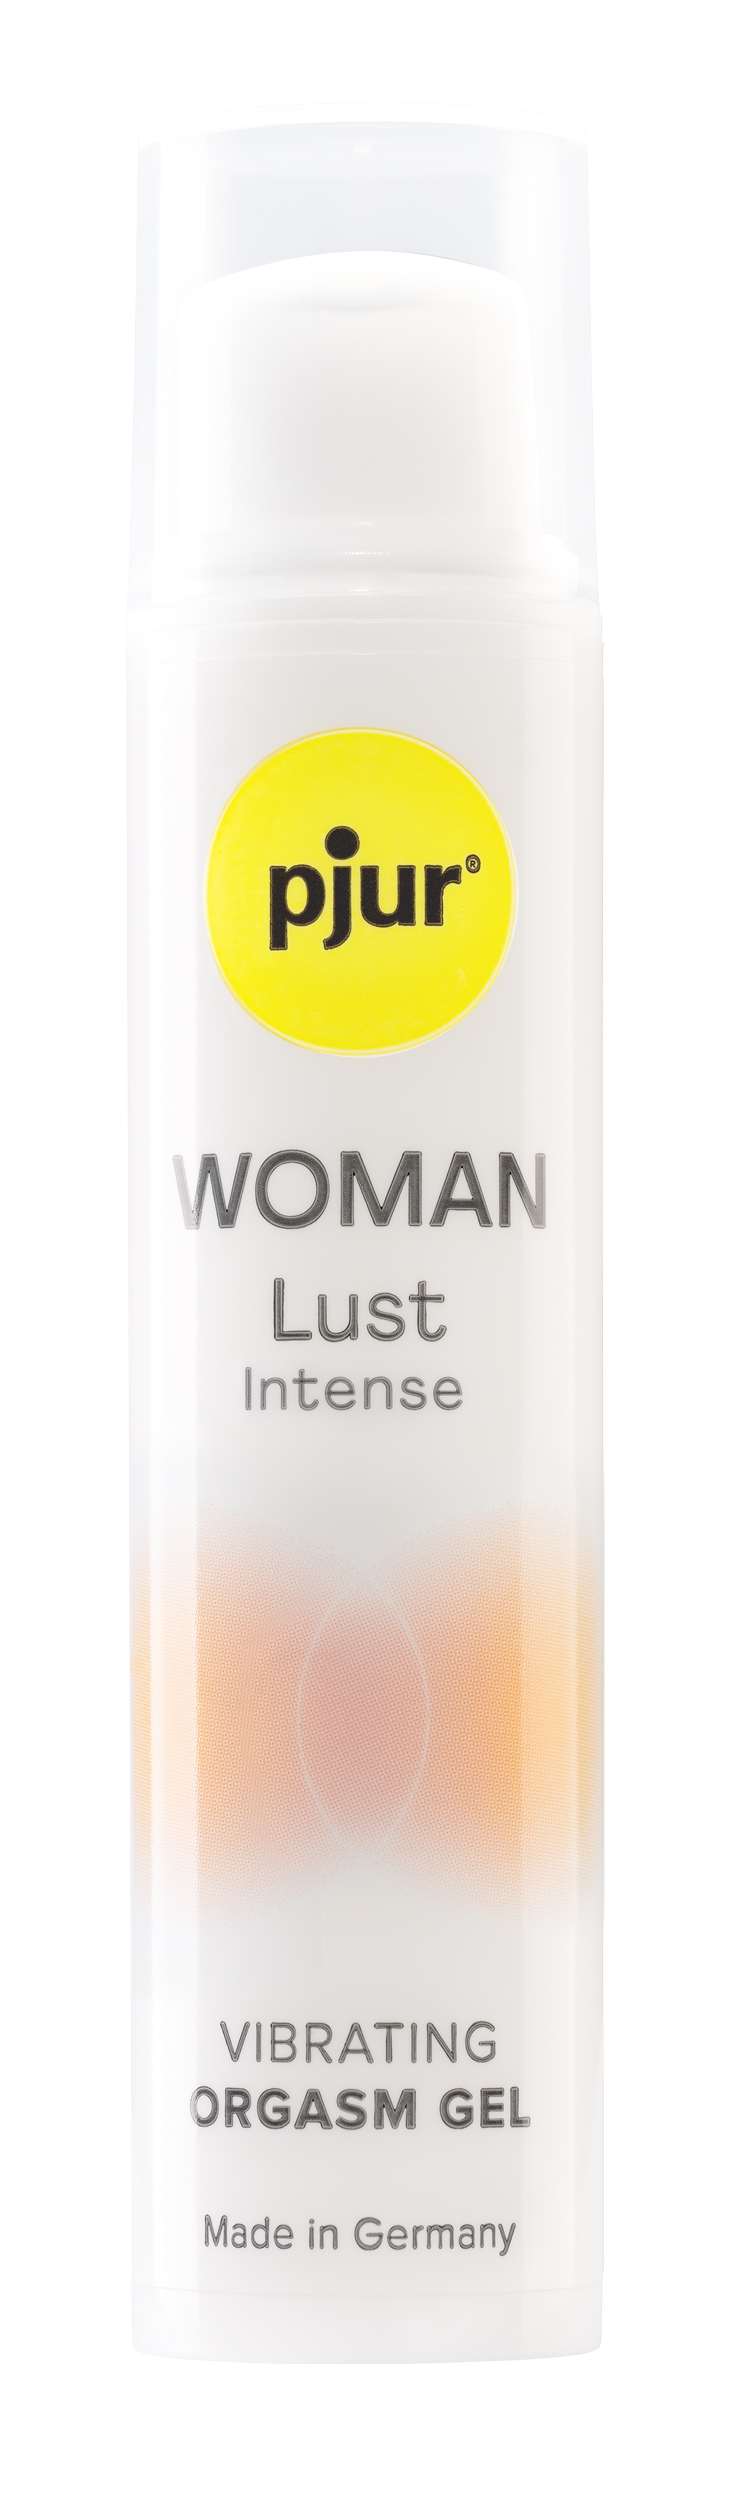 pjur Woman Lust Intense Vibrating Orgasm Gel 15ml